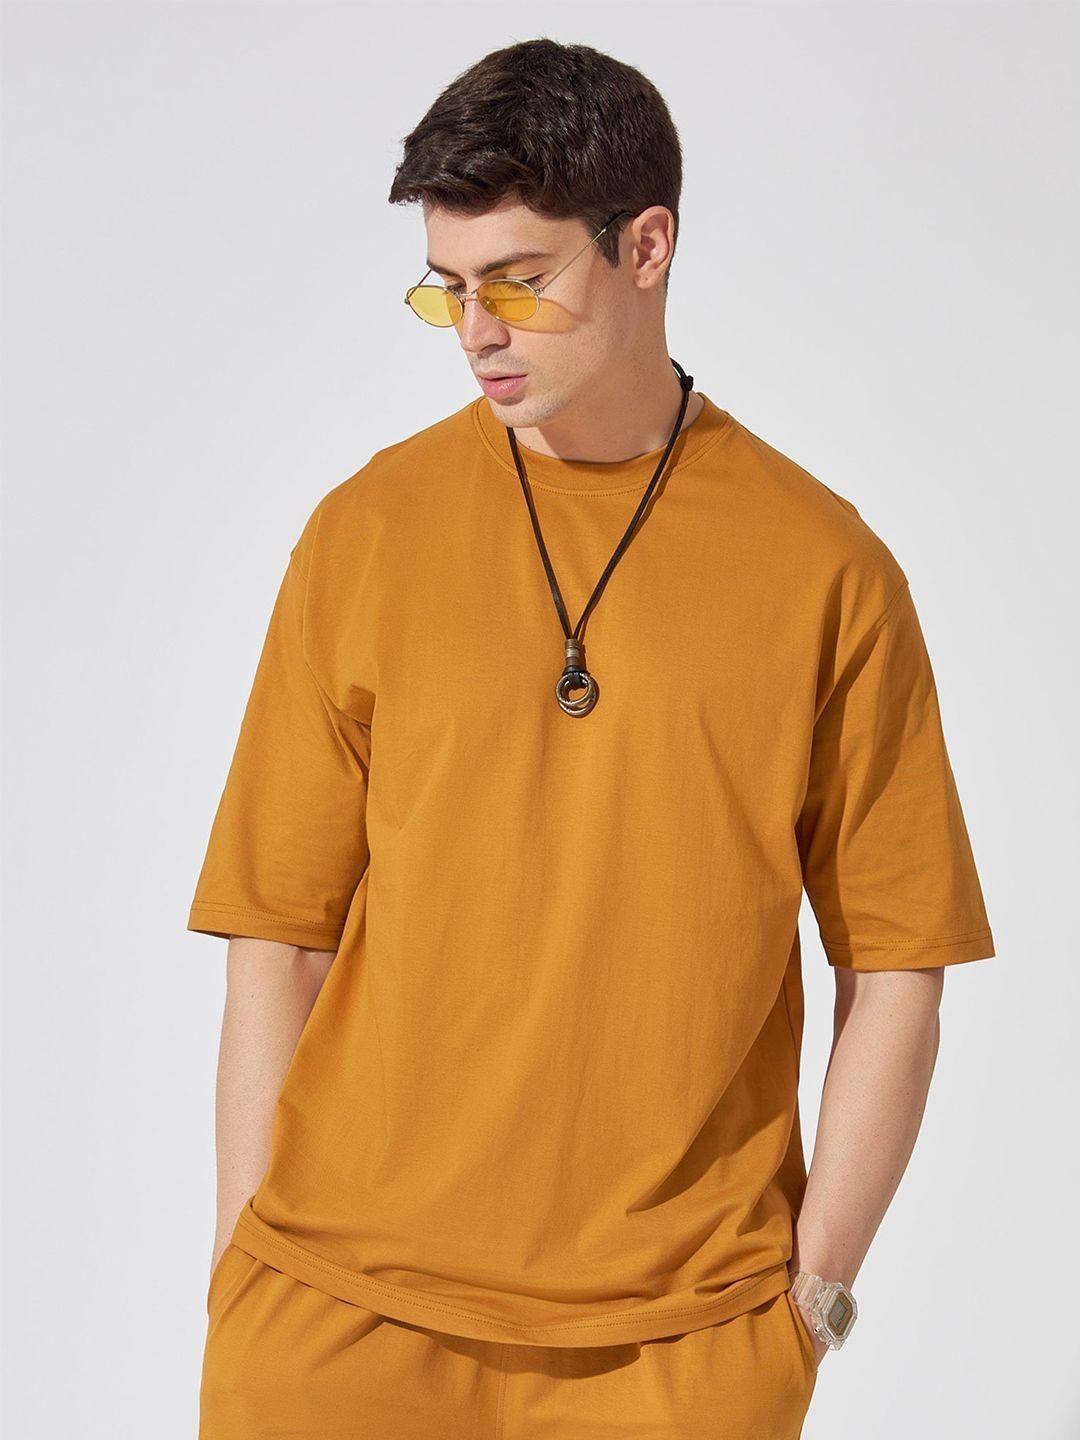 maniac-round-neck-short-sleeves-cotton-loose-t-shirt